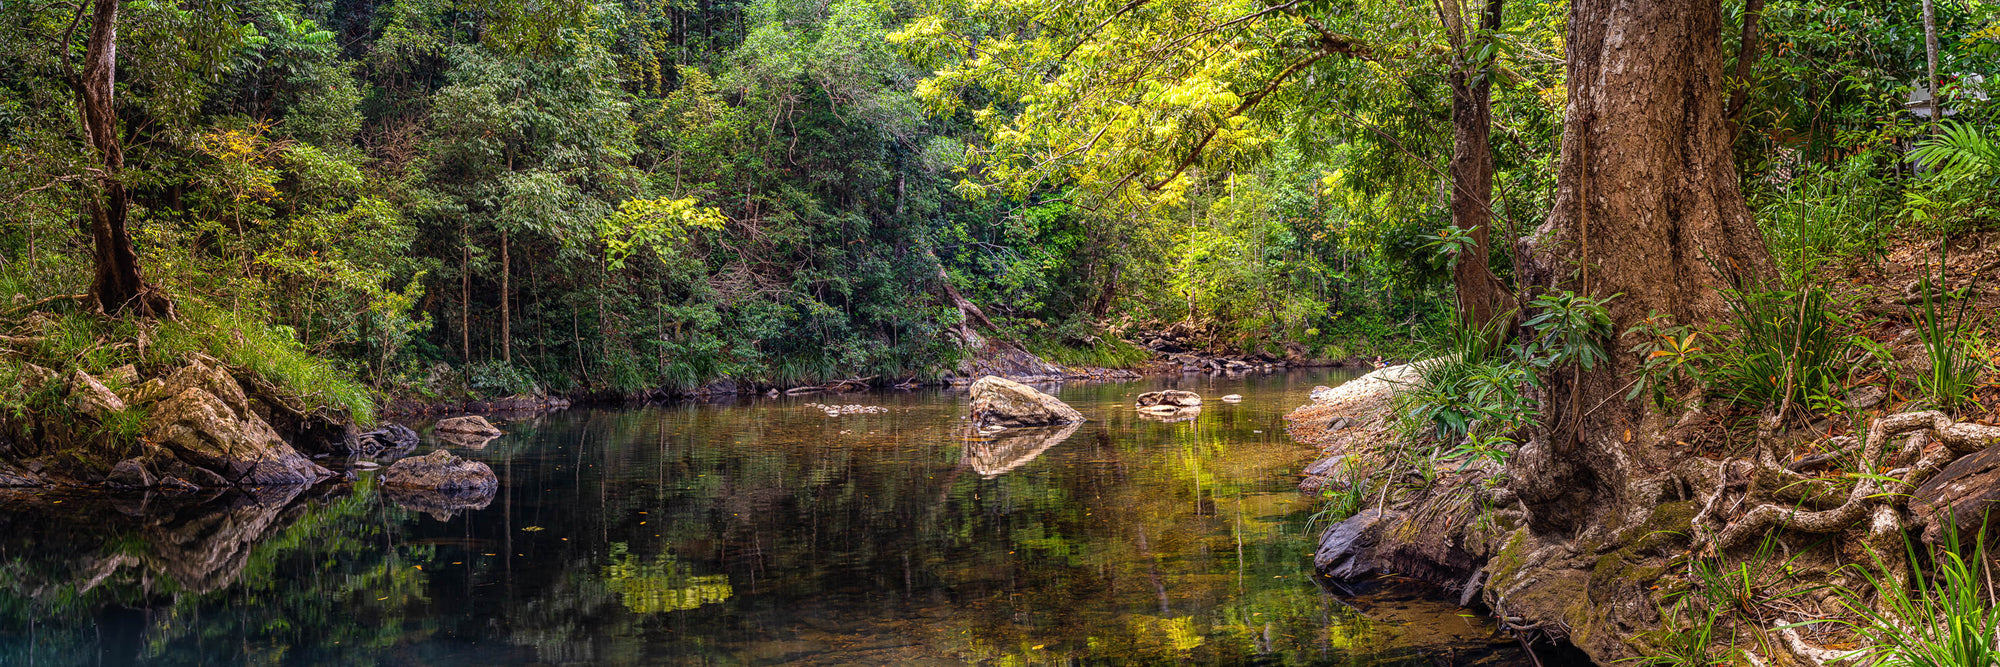 Daintree Rainforest Reflections